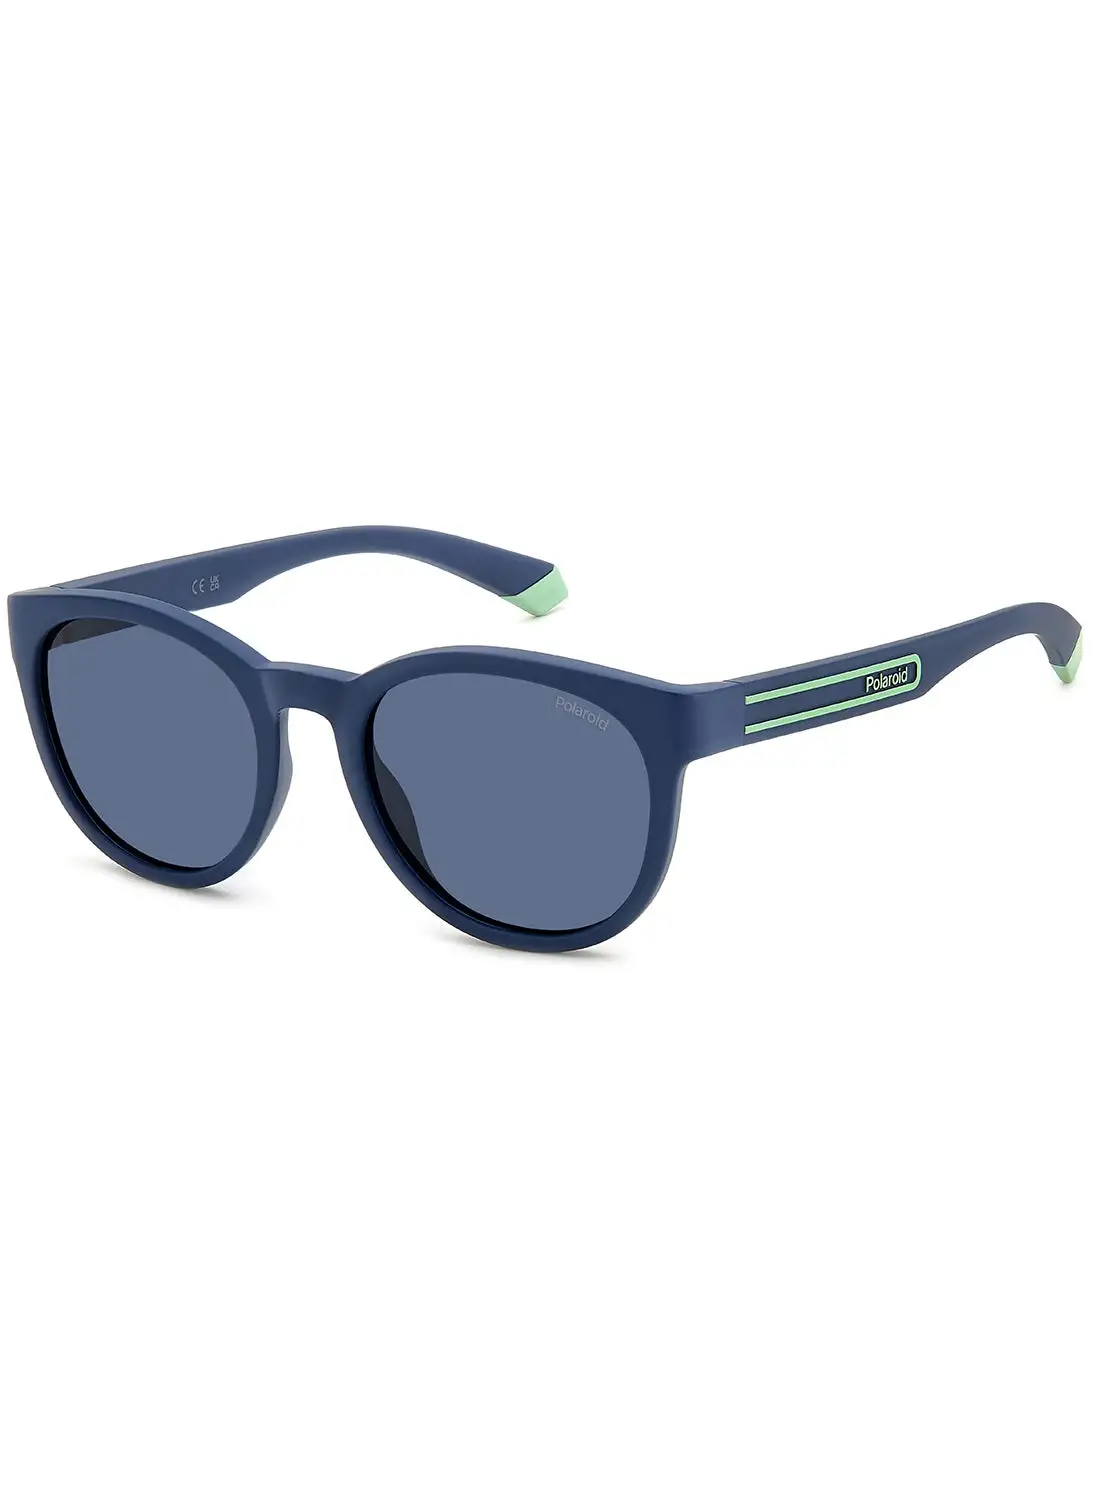 Polaroid Unisex Polarized Oval Sunglasses - Pld 2150/S Blue Millimeter - Lens Size: 52 Mm